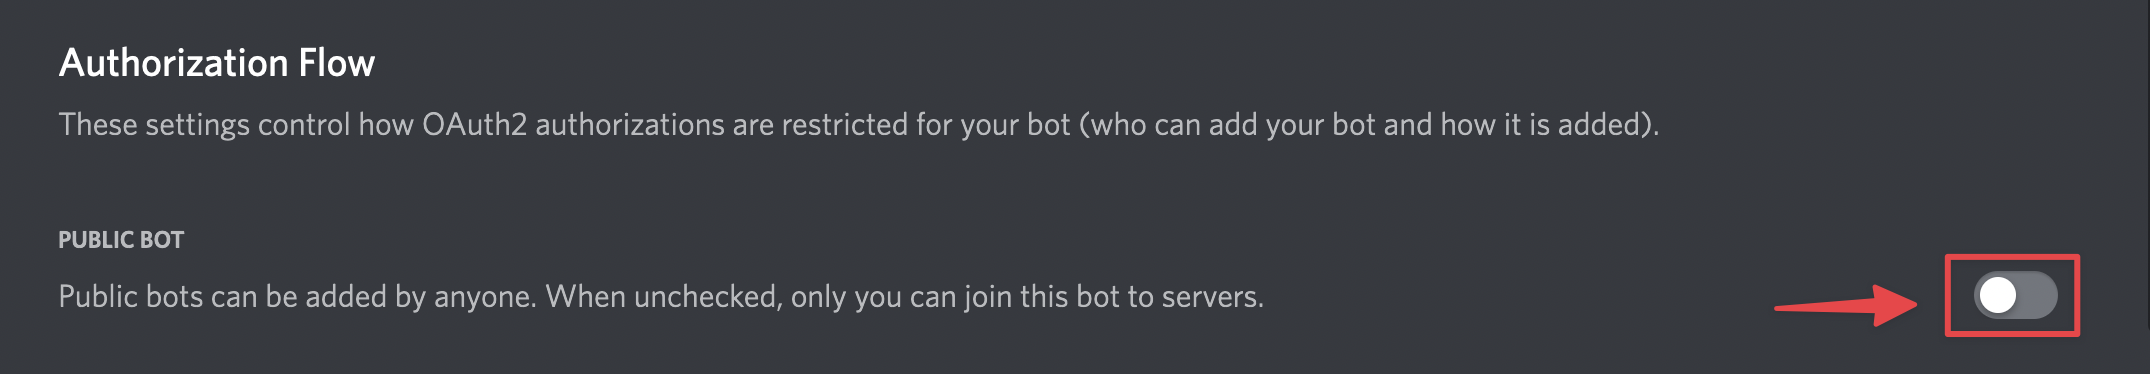 Public Bot option